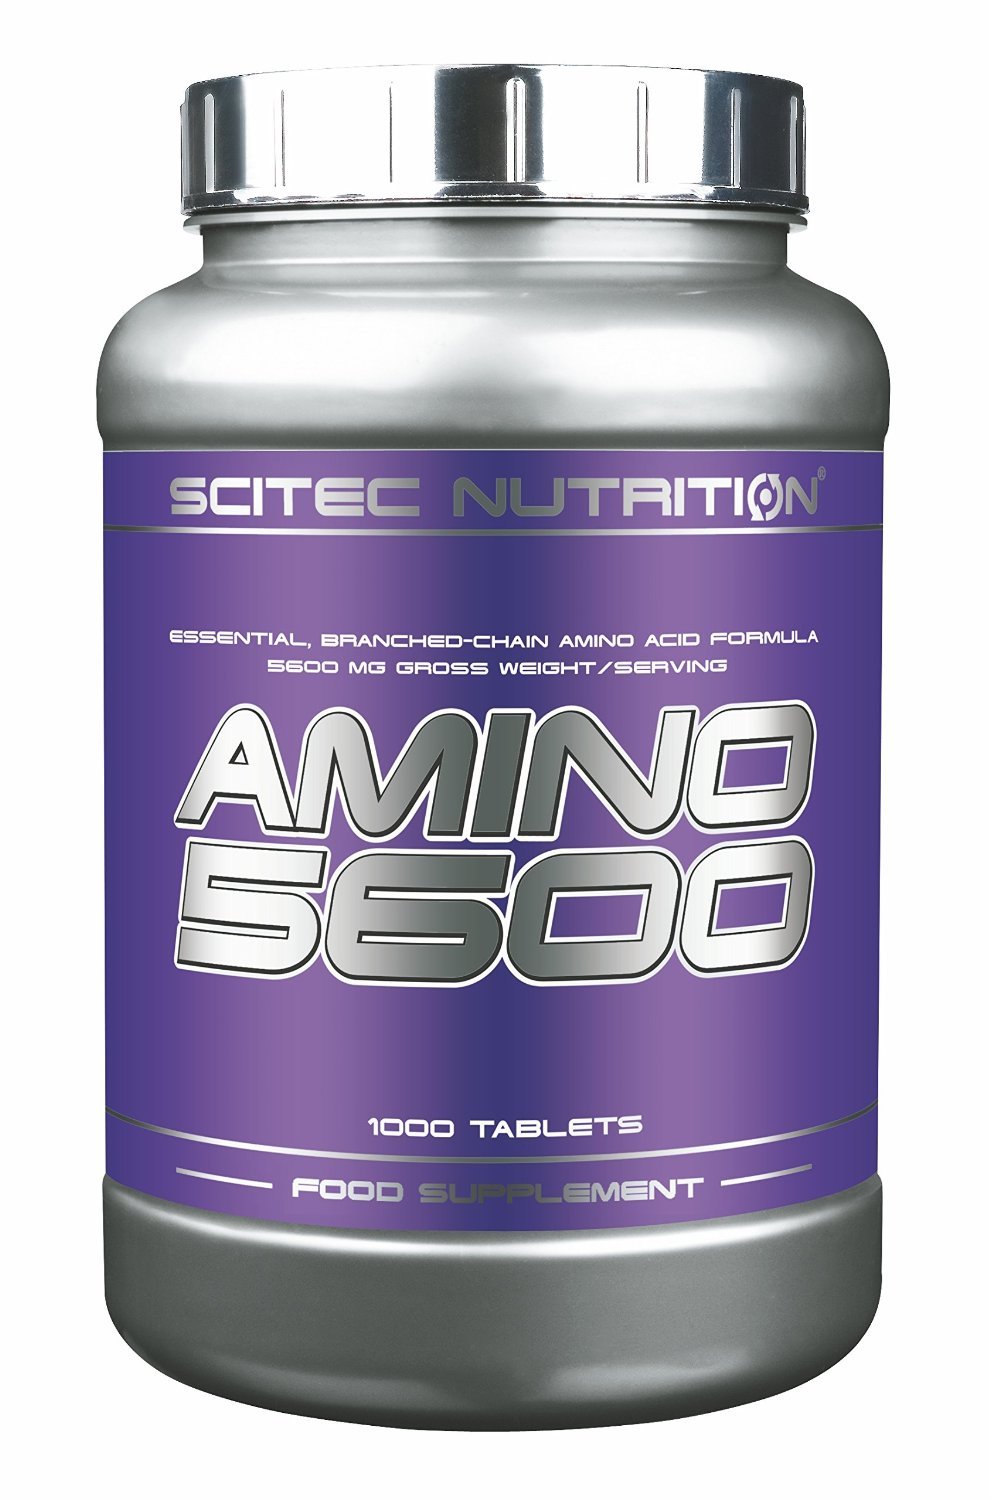 Amino 5600, 1000 pcs, Scitec Nutrition. Amino acid complex. 